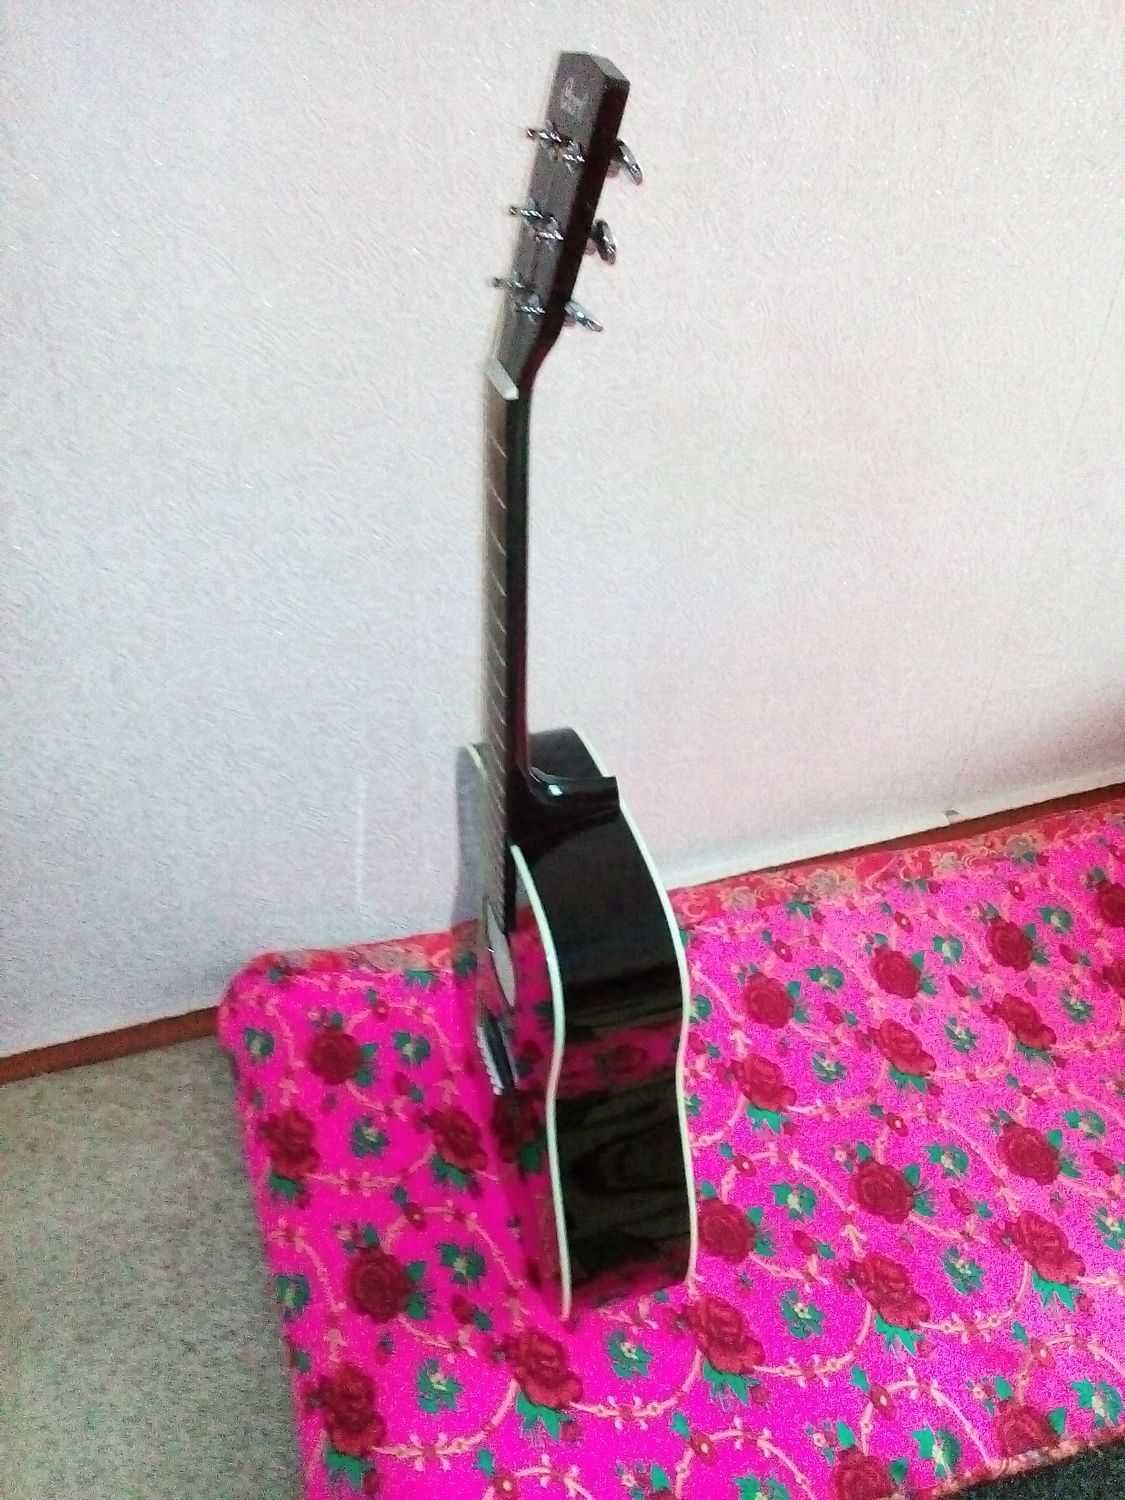 Гитара Cort AD-870 (с чехлом)